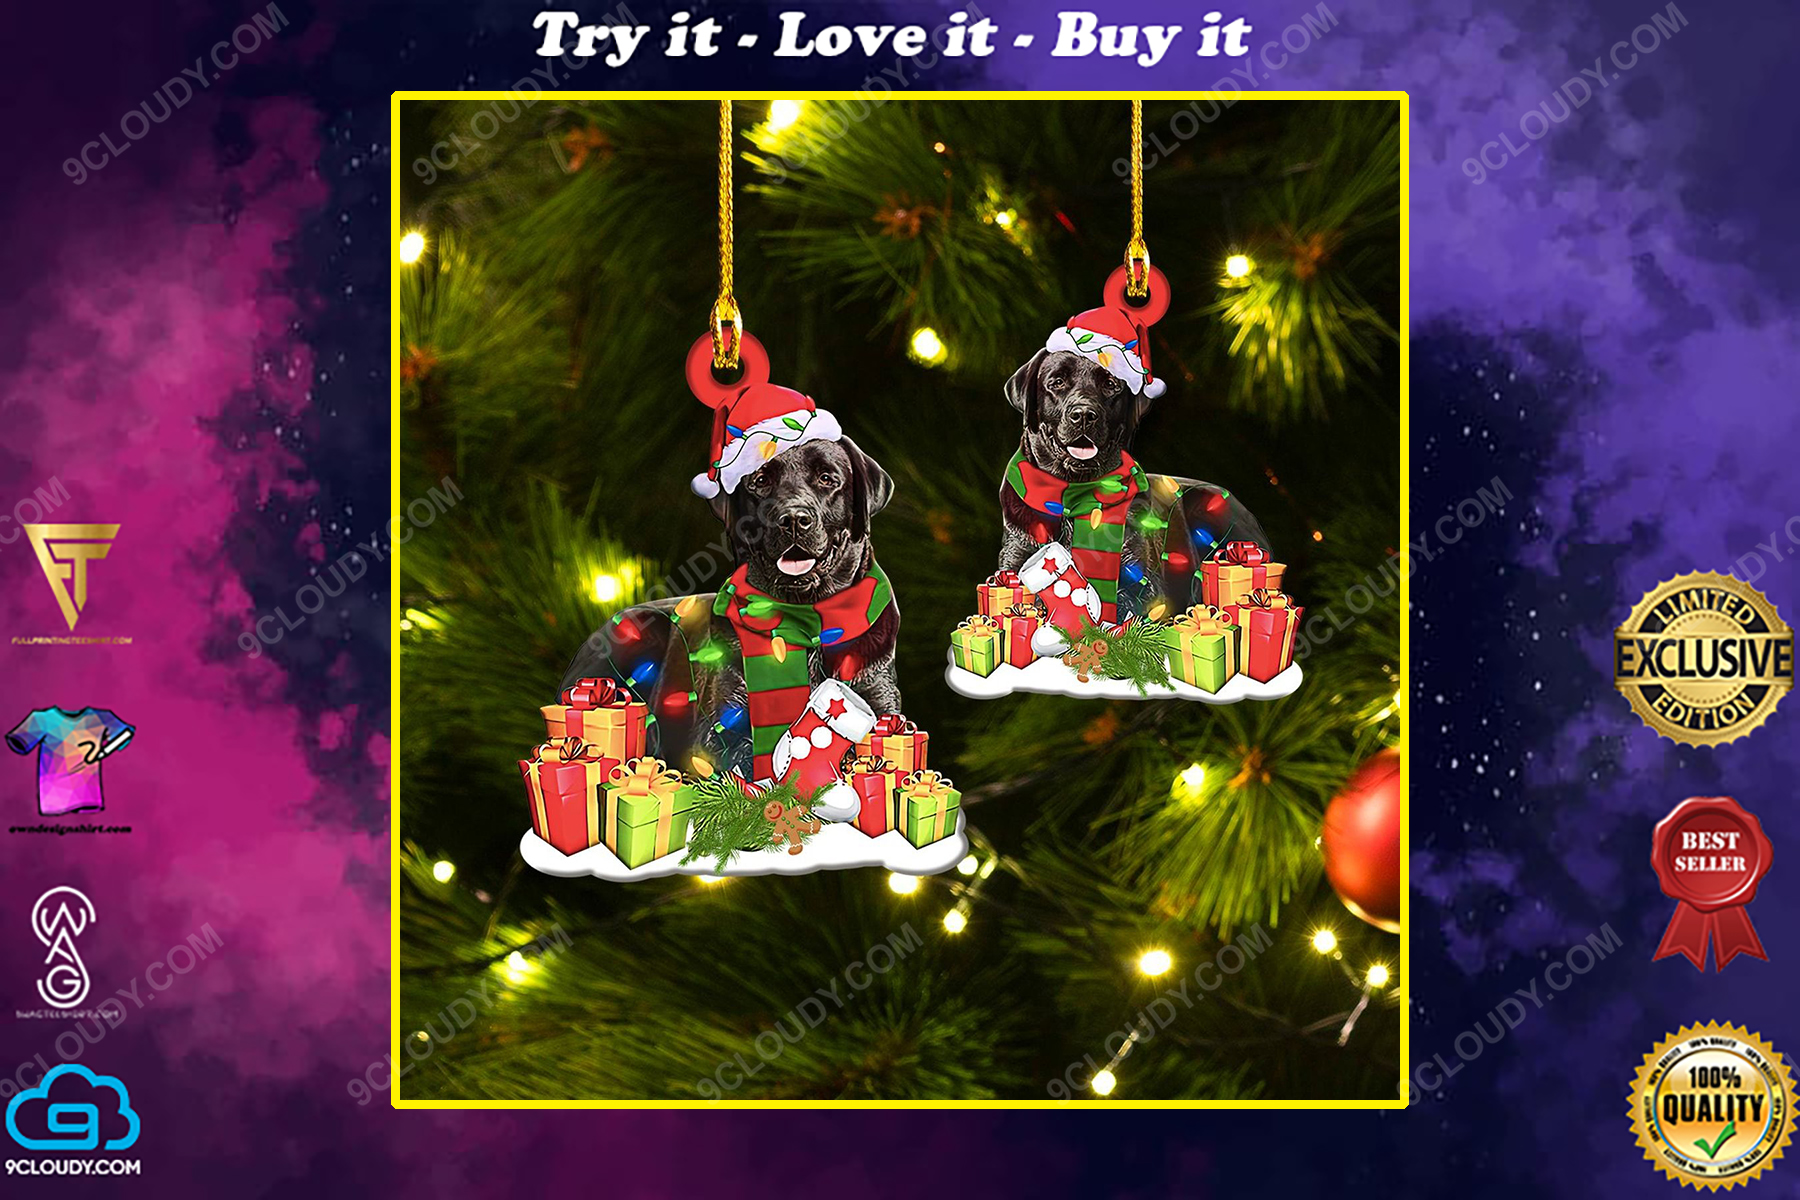 Dog lover labrador with santa hat christmas gift ornament